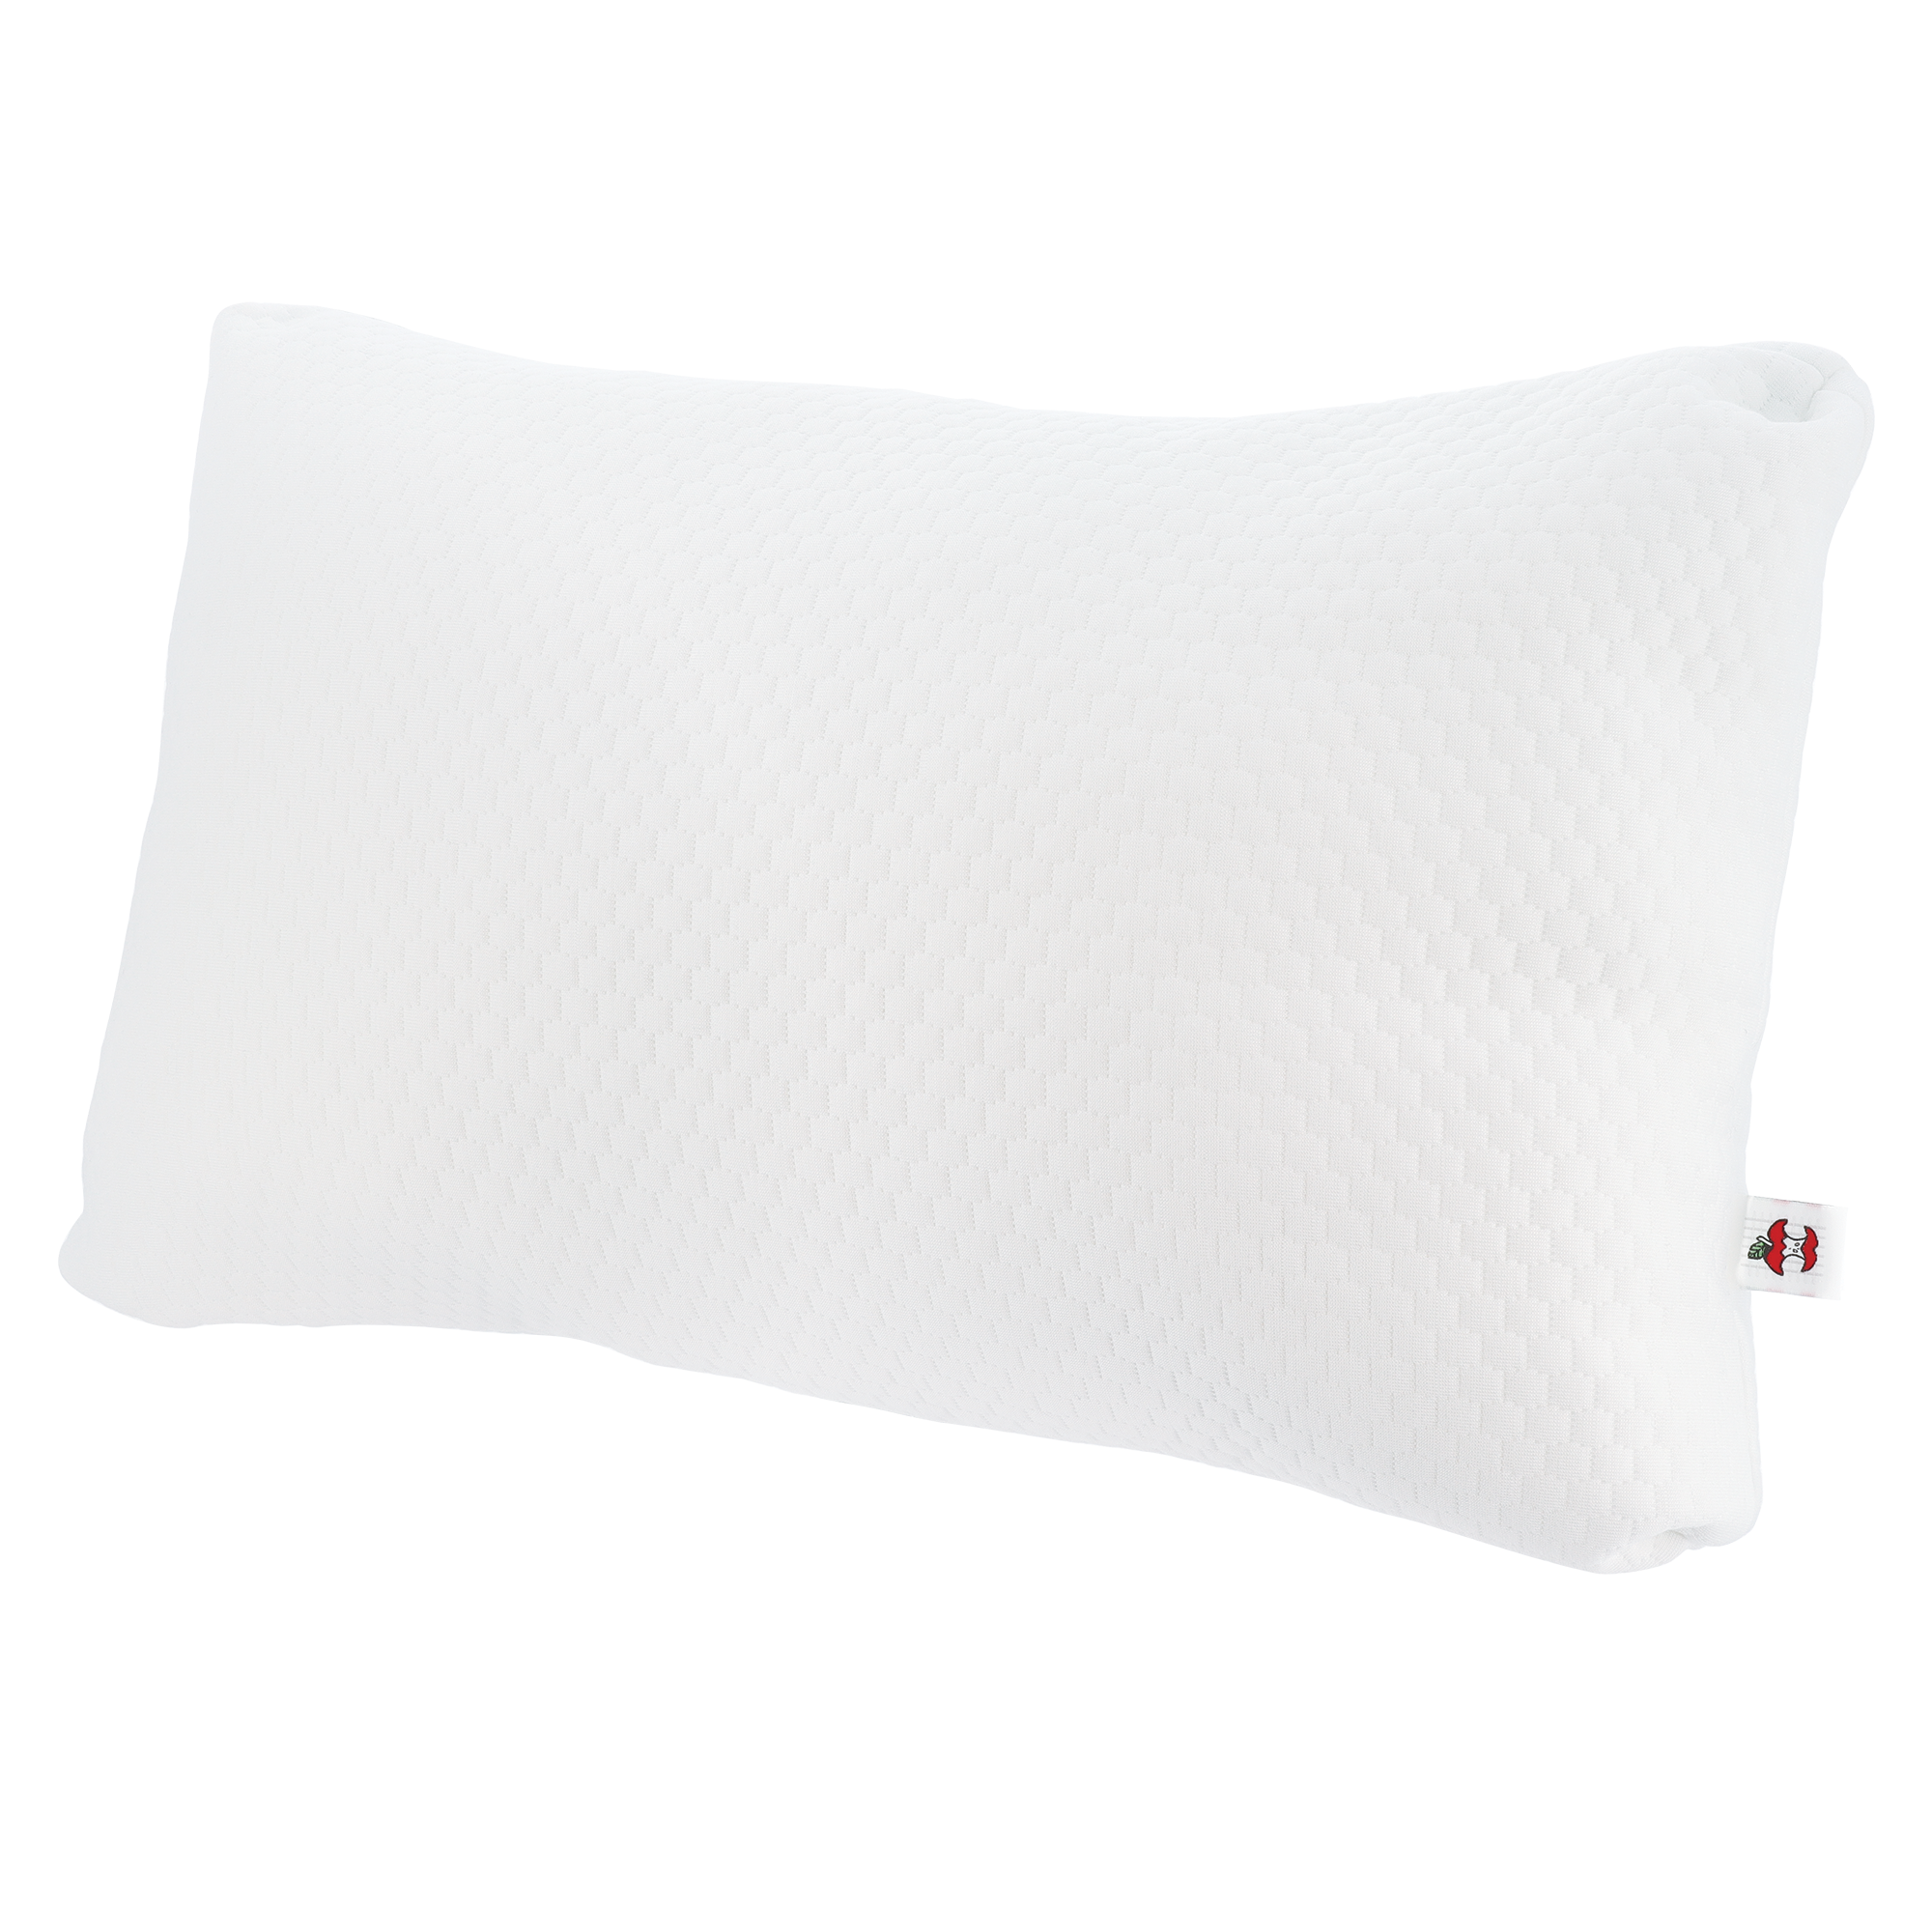 CerviLoft Adjustable Cervical Comfort Pillow